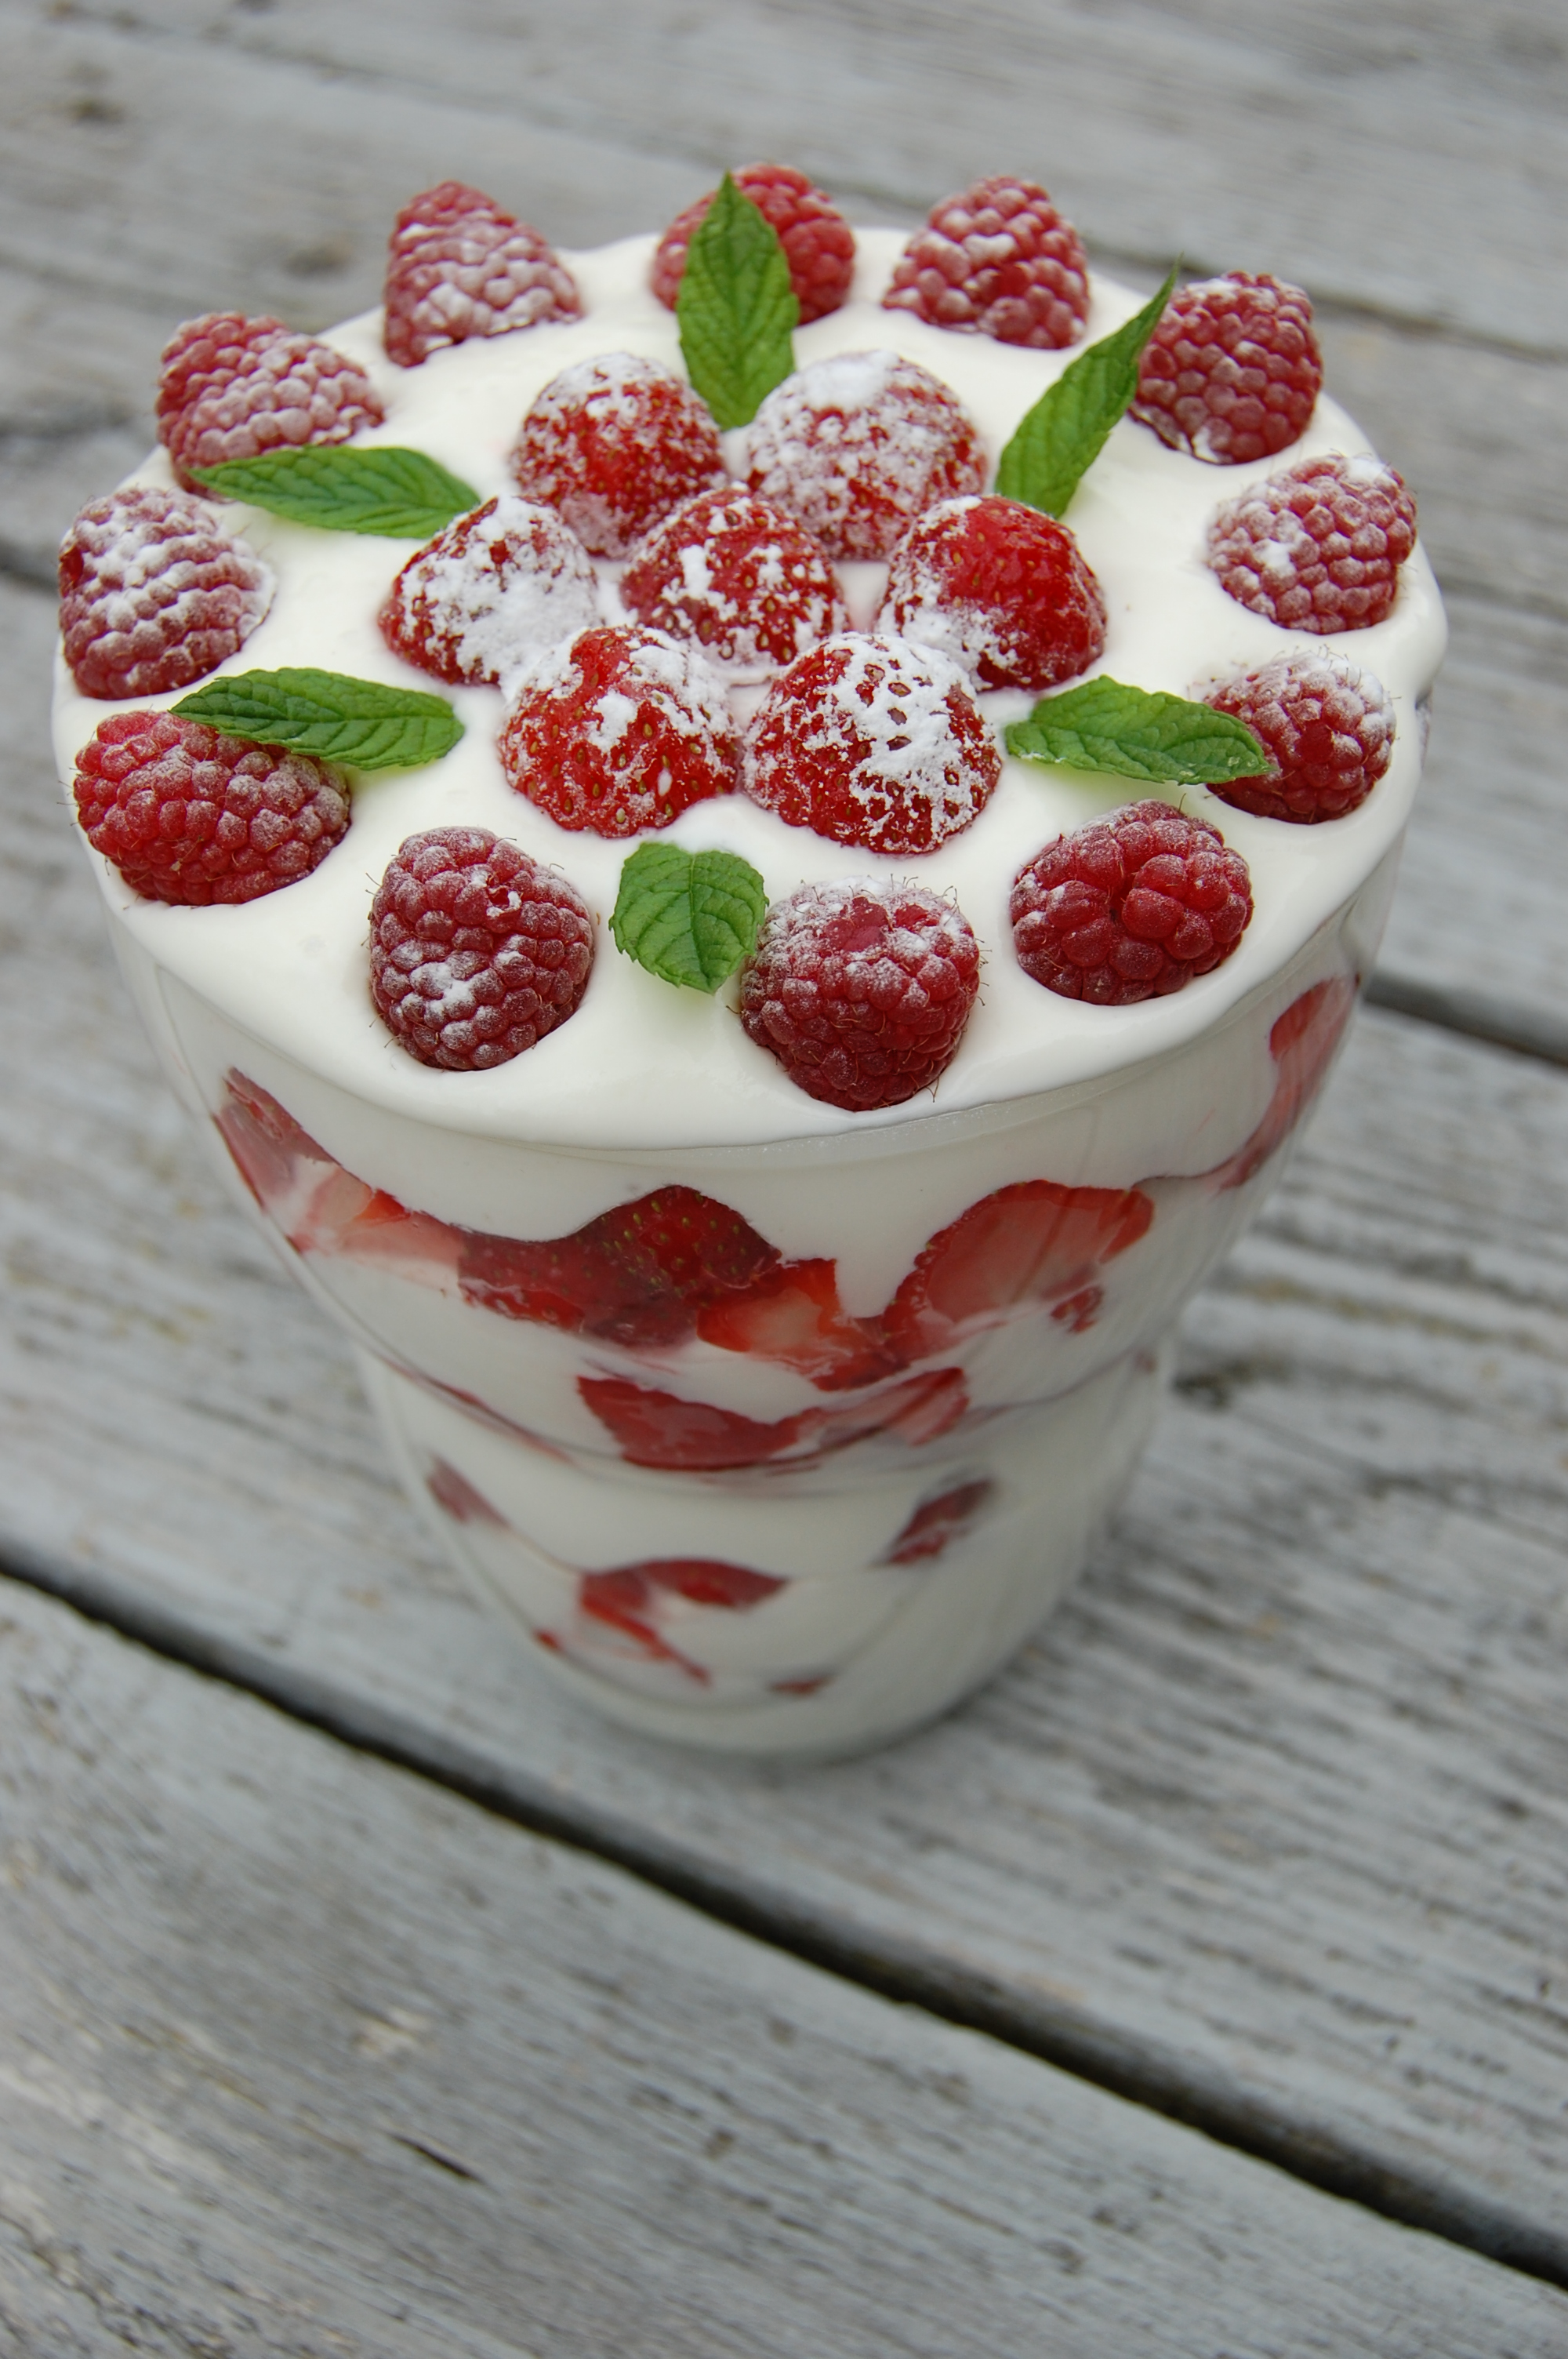 Wonderbaar Griekse yoghurt met aardbeien | Uit de keuken van Lein WQ-72